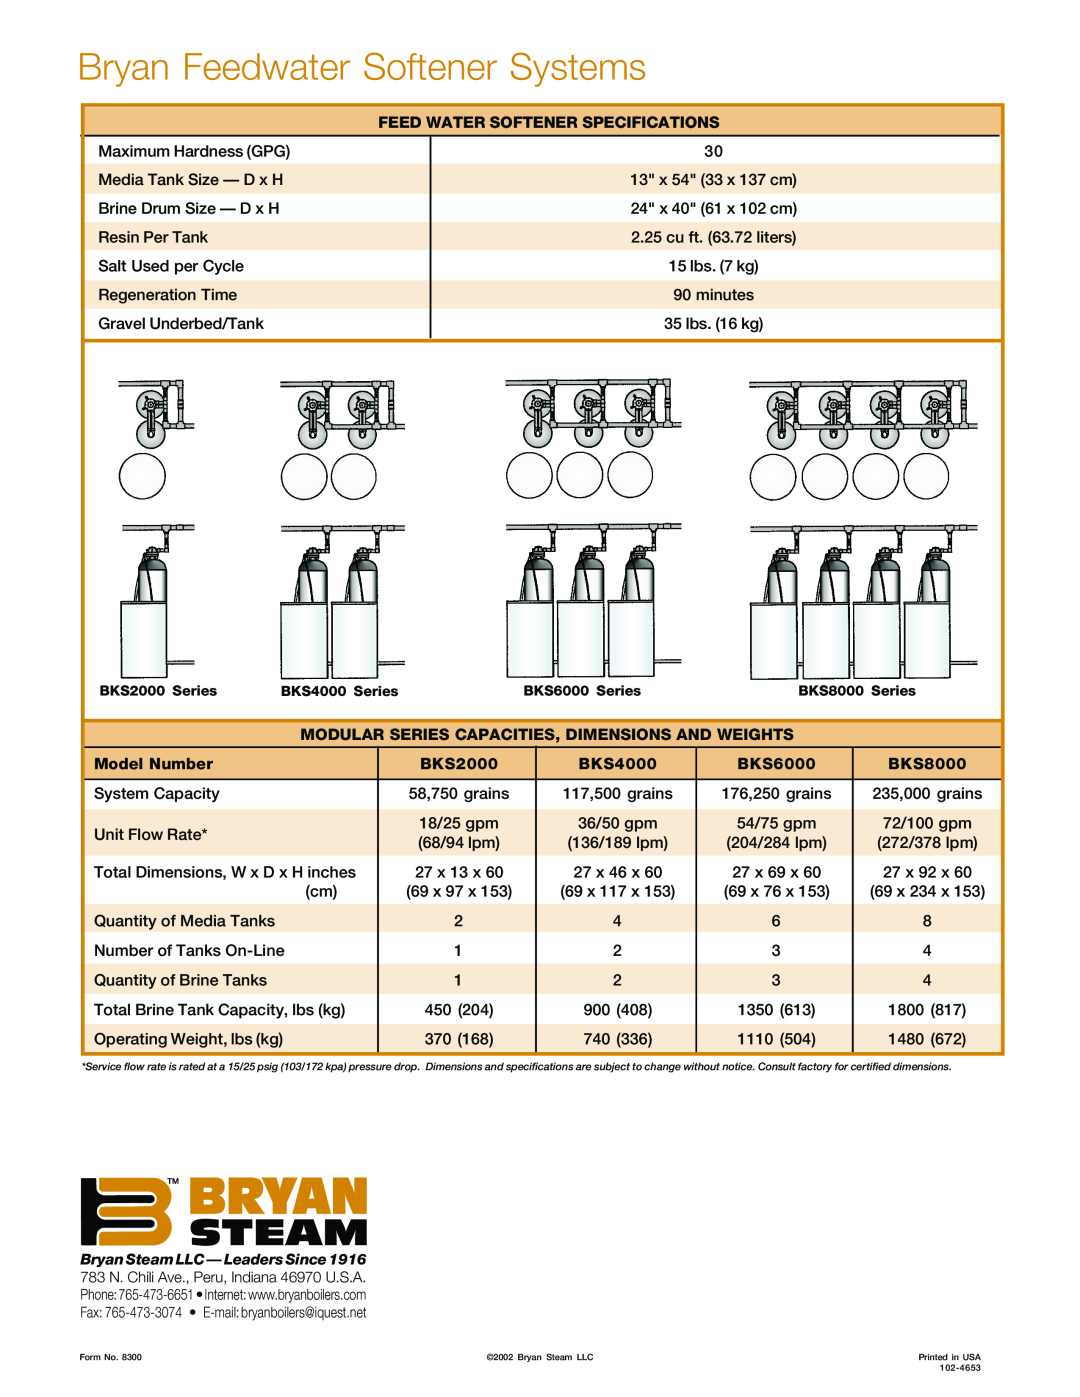 Bryan Boilers BKS2000 Bryan Feedwater Softener Systems, Feed Water Softener Specifications, Model Number, BKS4000, BKS6000 